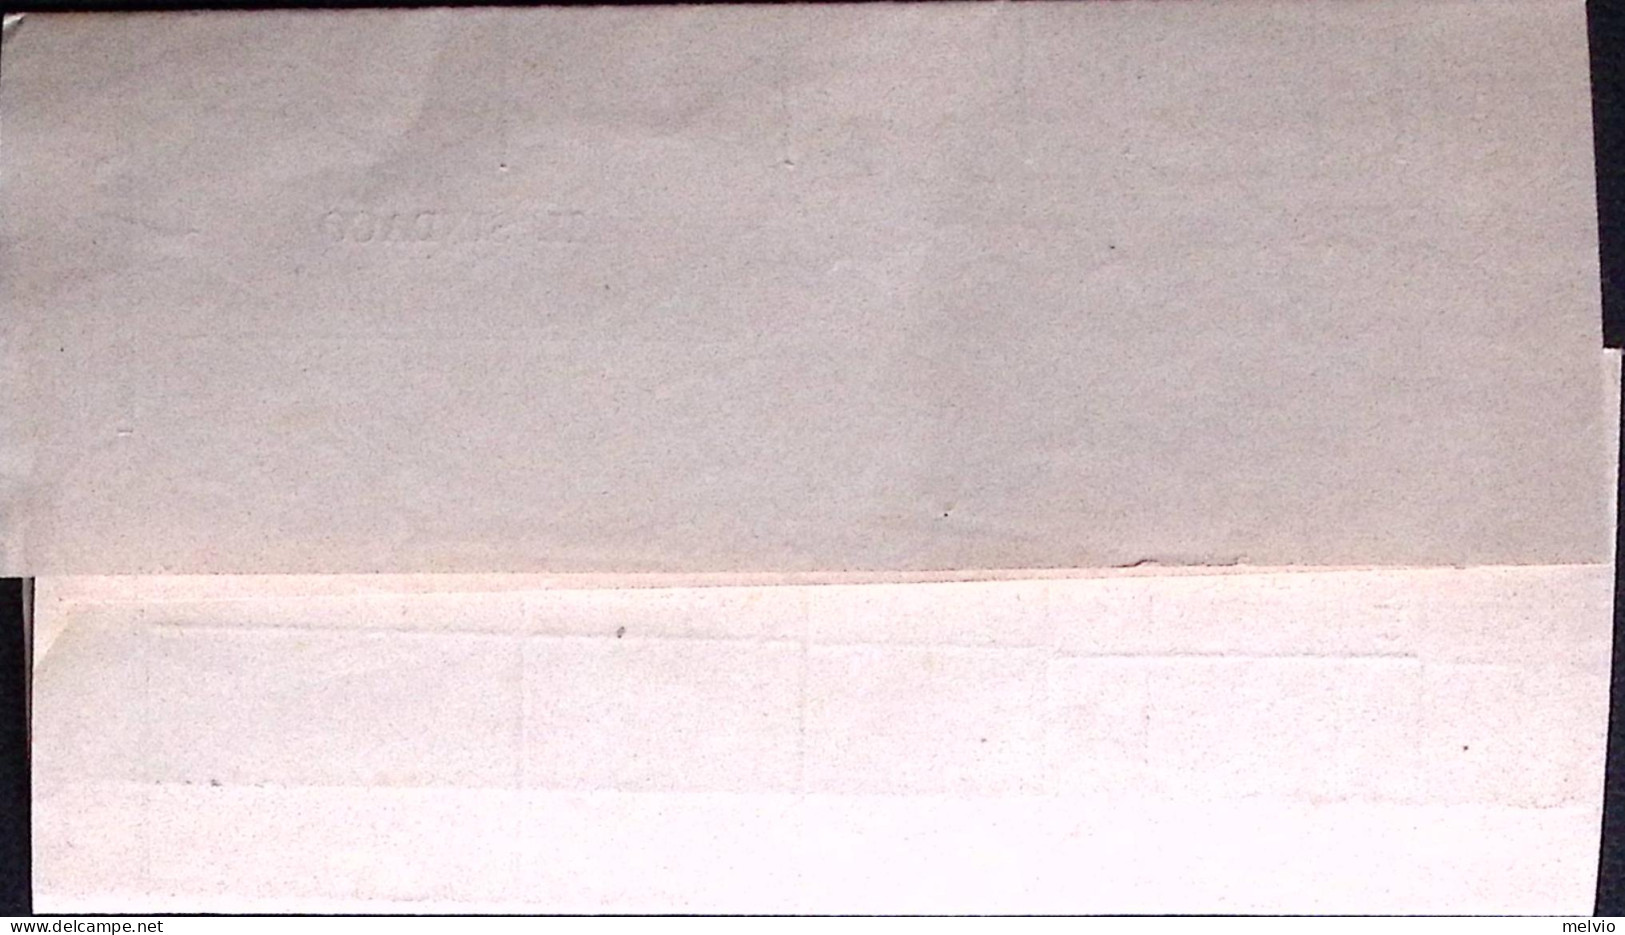 1889-CIFRA C.1 (T14) Isolato Su Stampe - Storia Postale